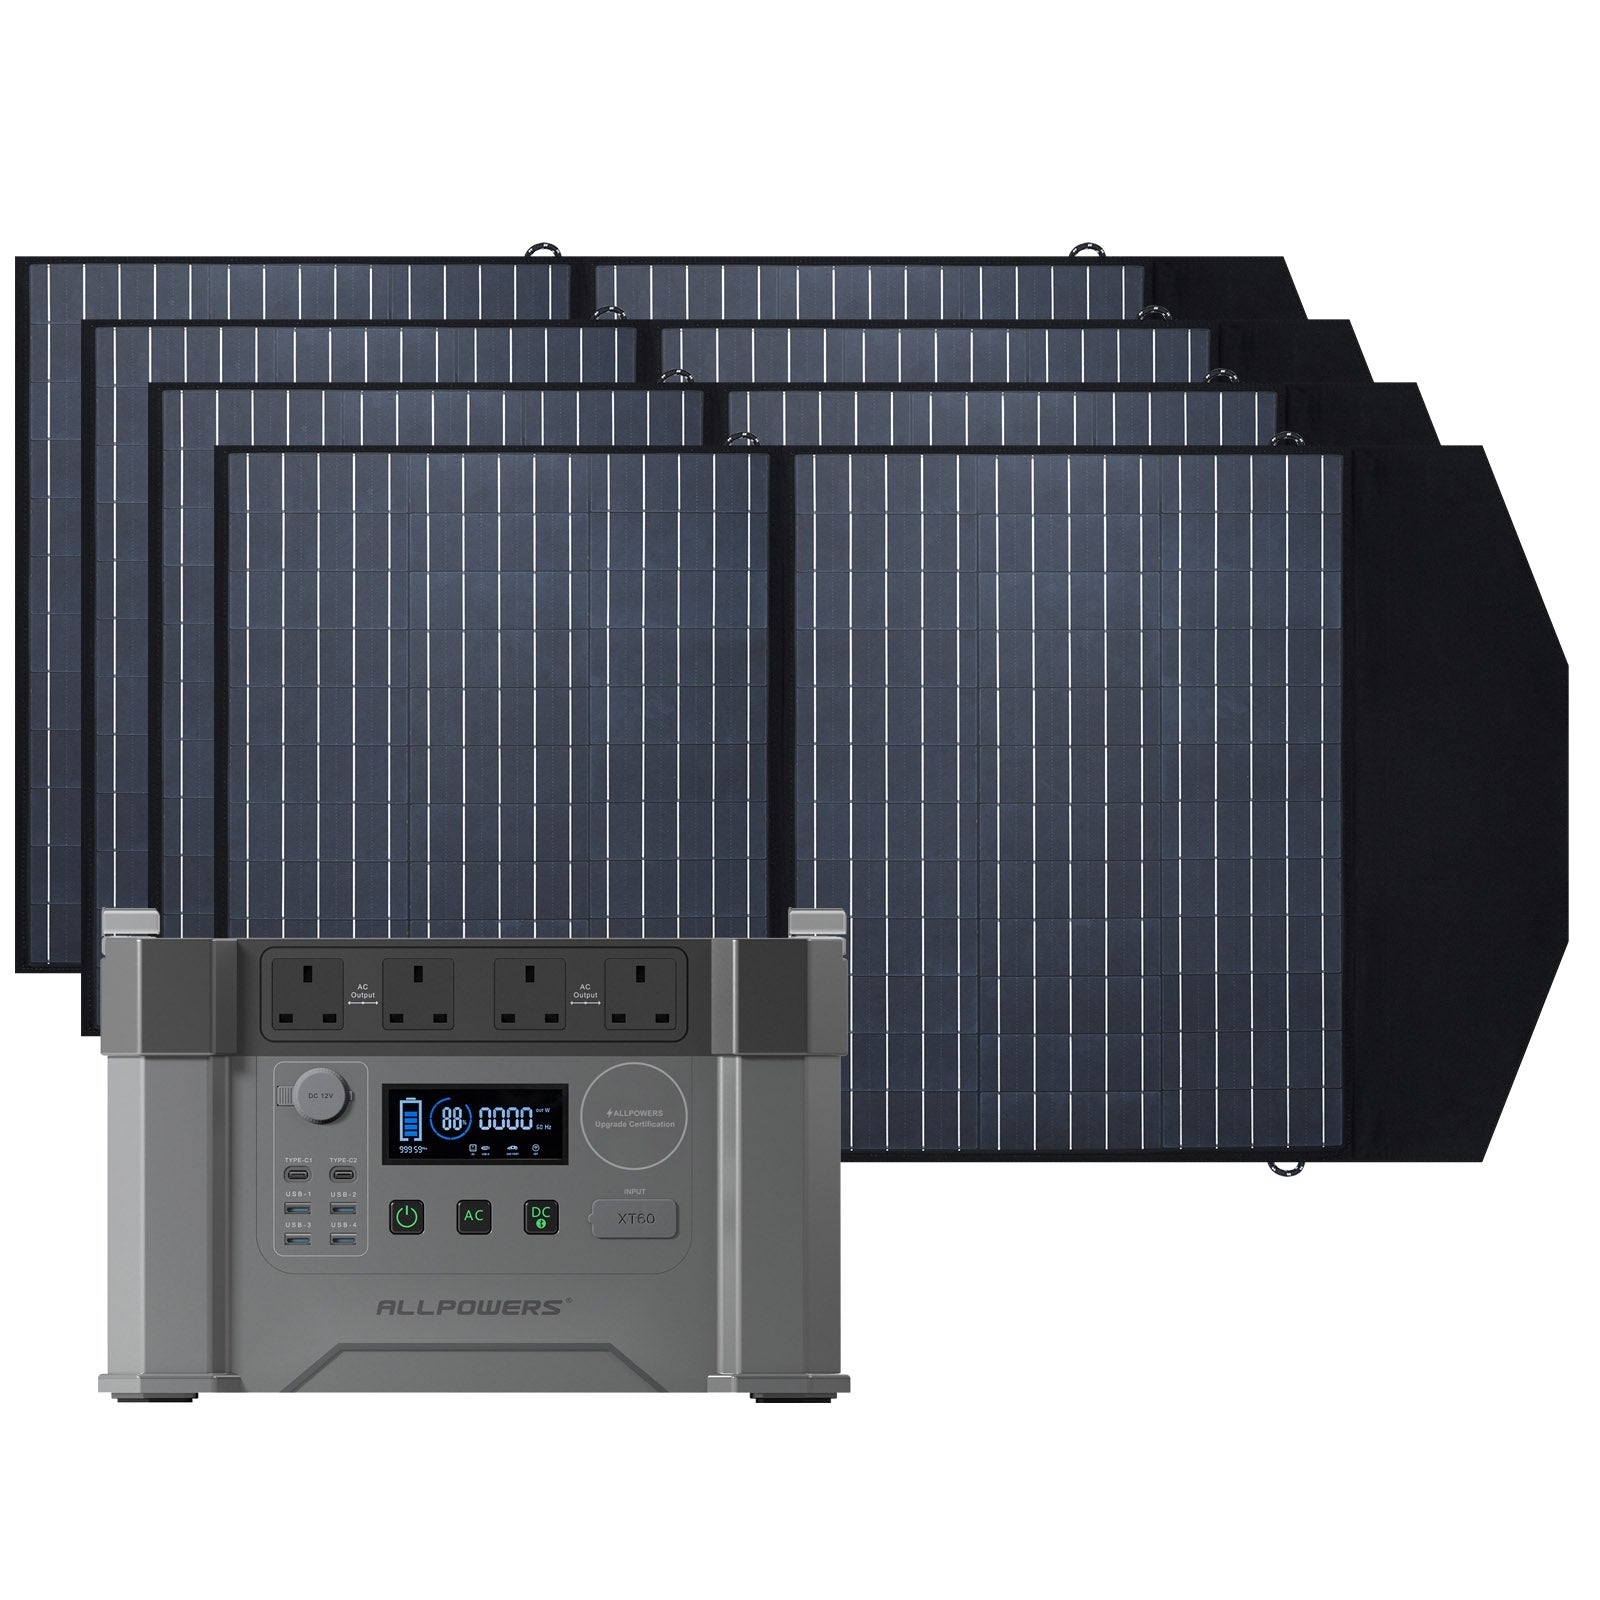 ALLPOWERS Solar Generator 2000W (S2000 + SP027 100W Solar Panel)